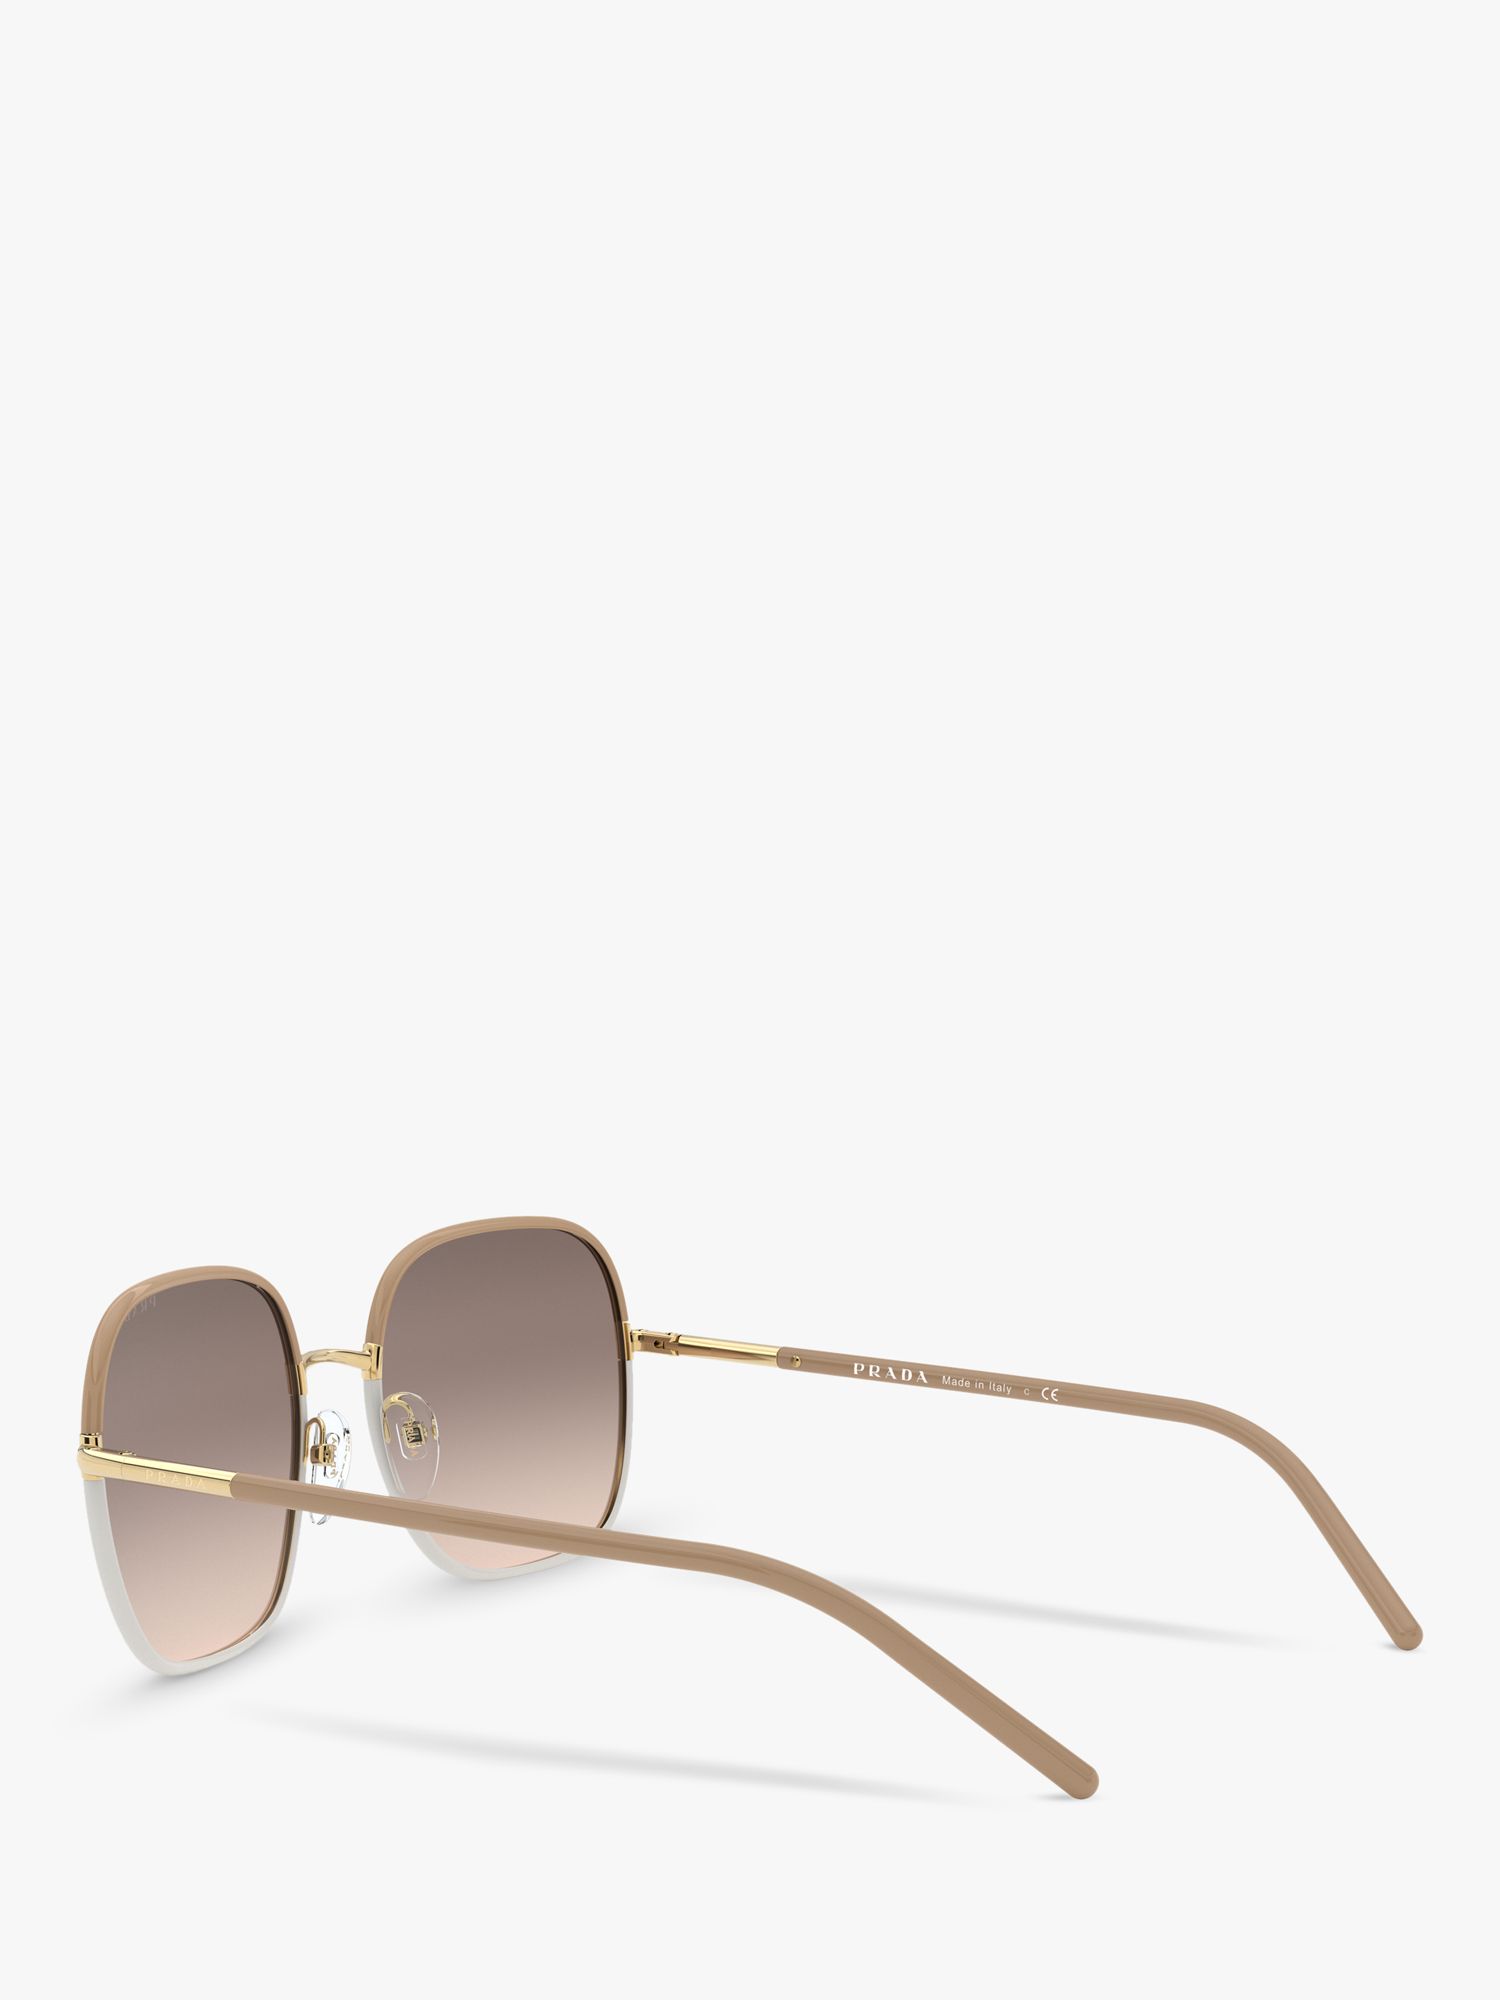 Prada PR 67XS Women's Square Sunglasses, Gold/Beige/Light Brown ...